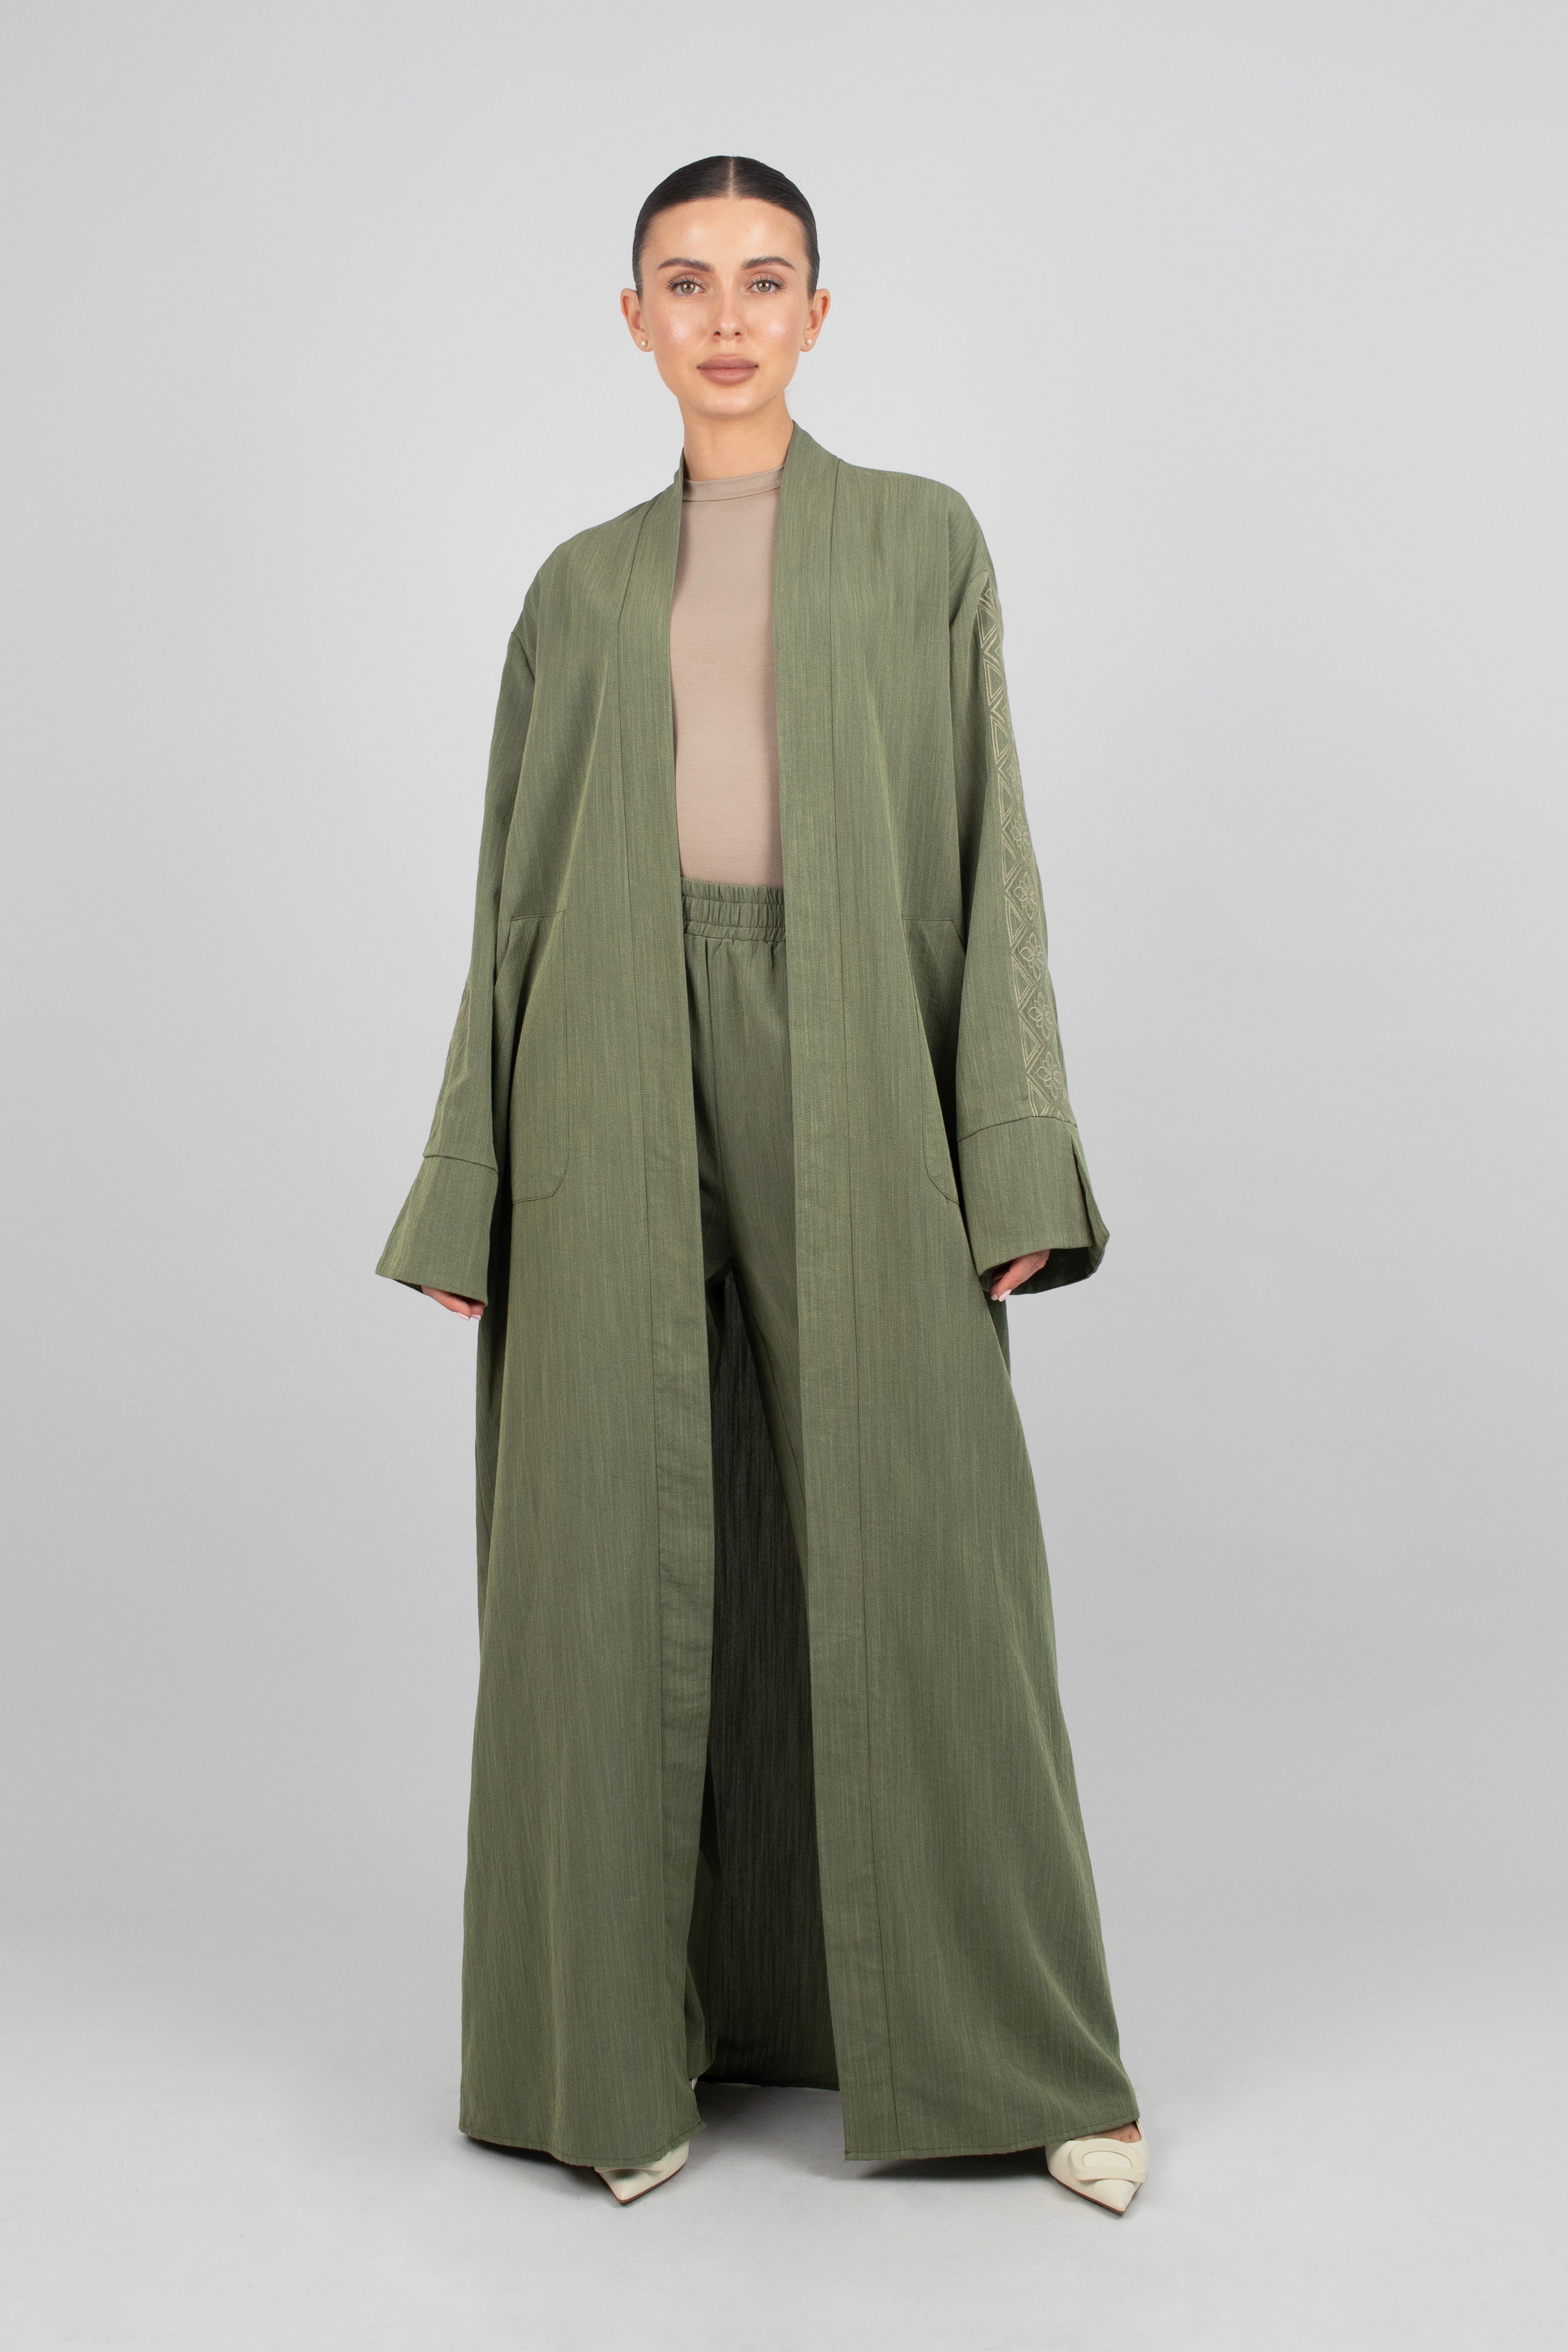 US - Embroidered Sleeve Abaya - Desert Green